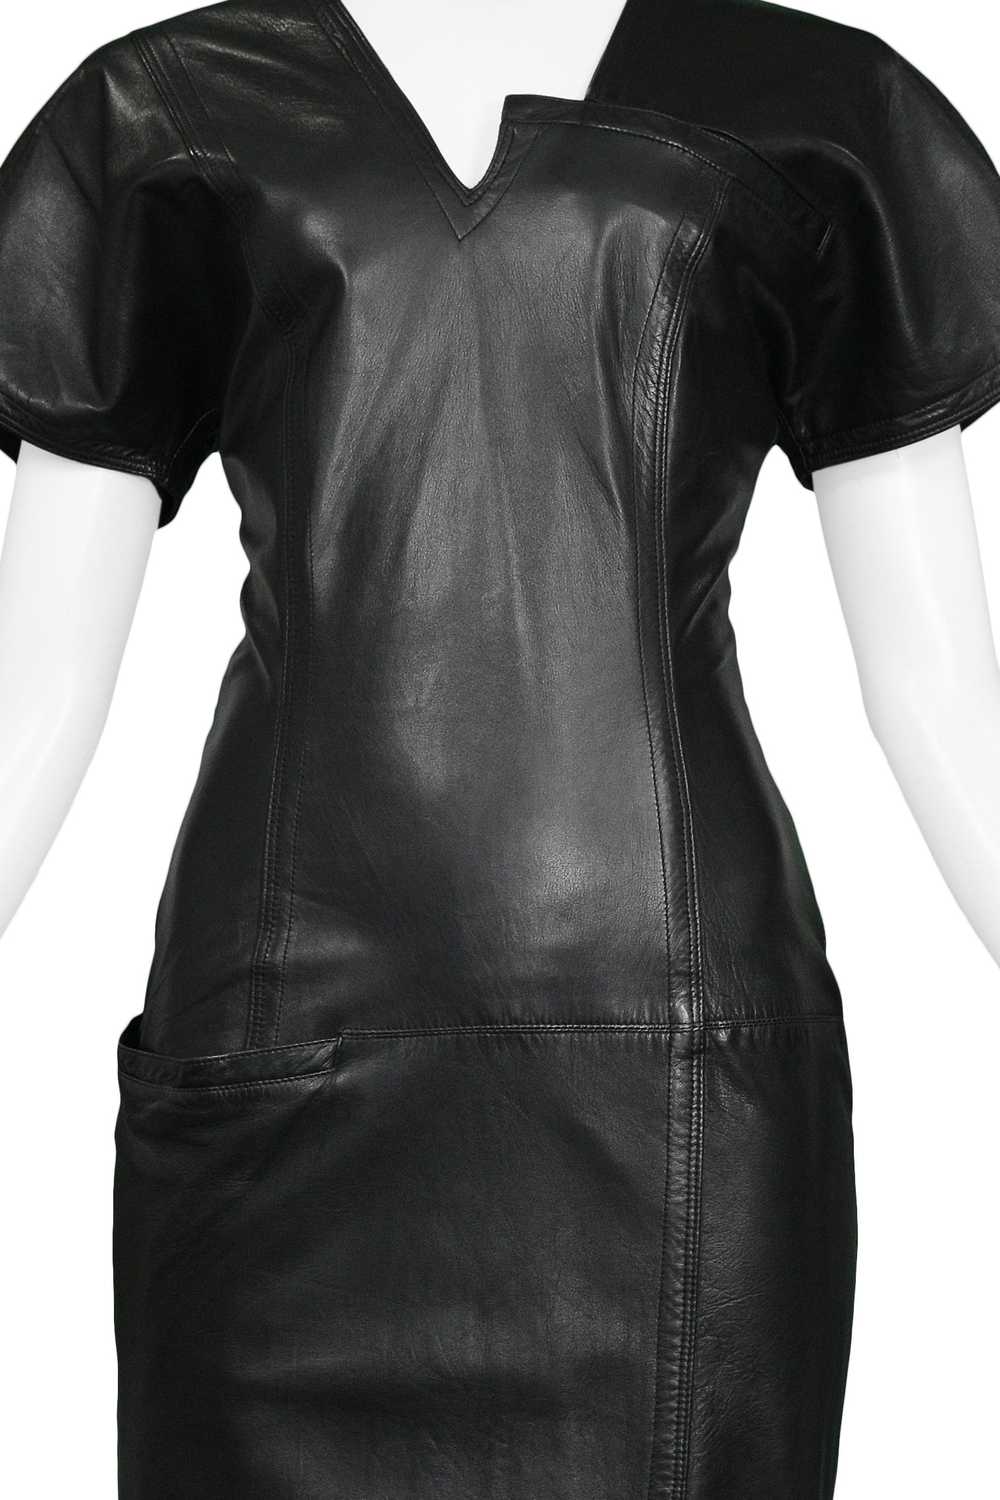 VERSACE BLACK ASYMMETRICAL LEATHER DRESS 1990s - image 4